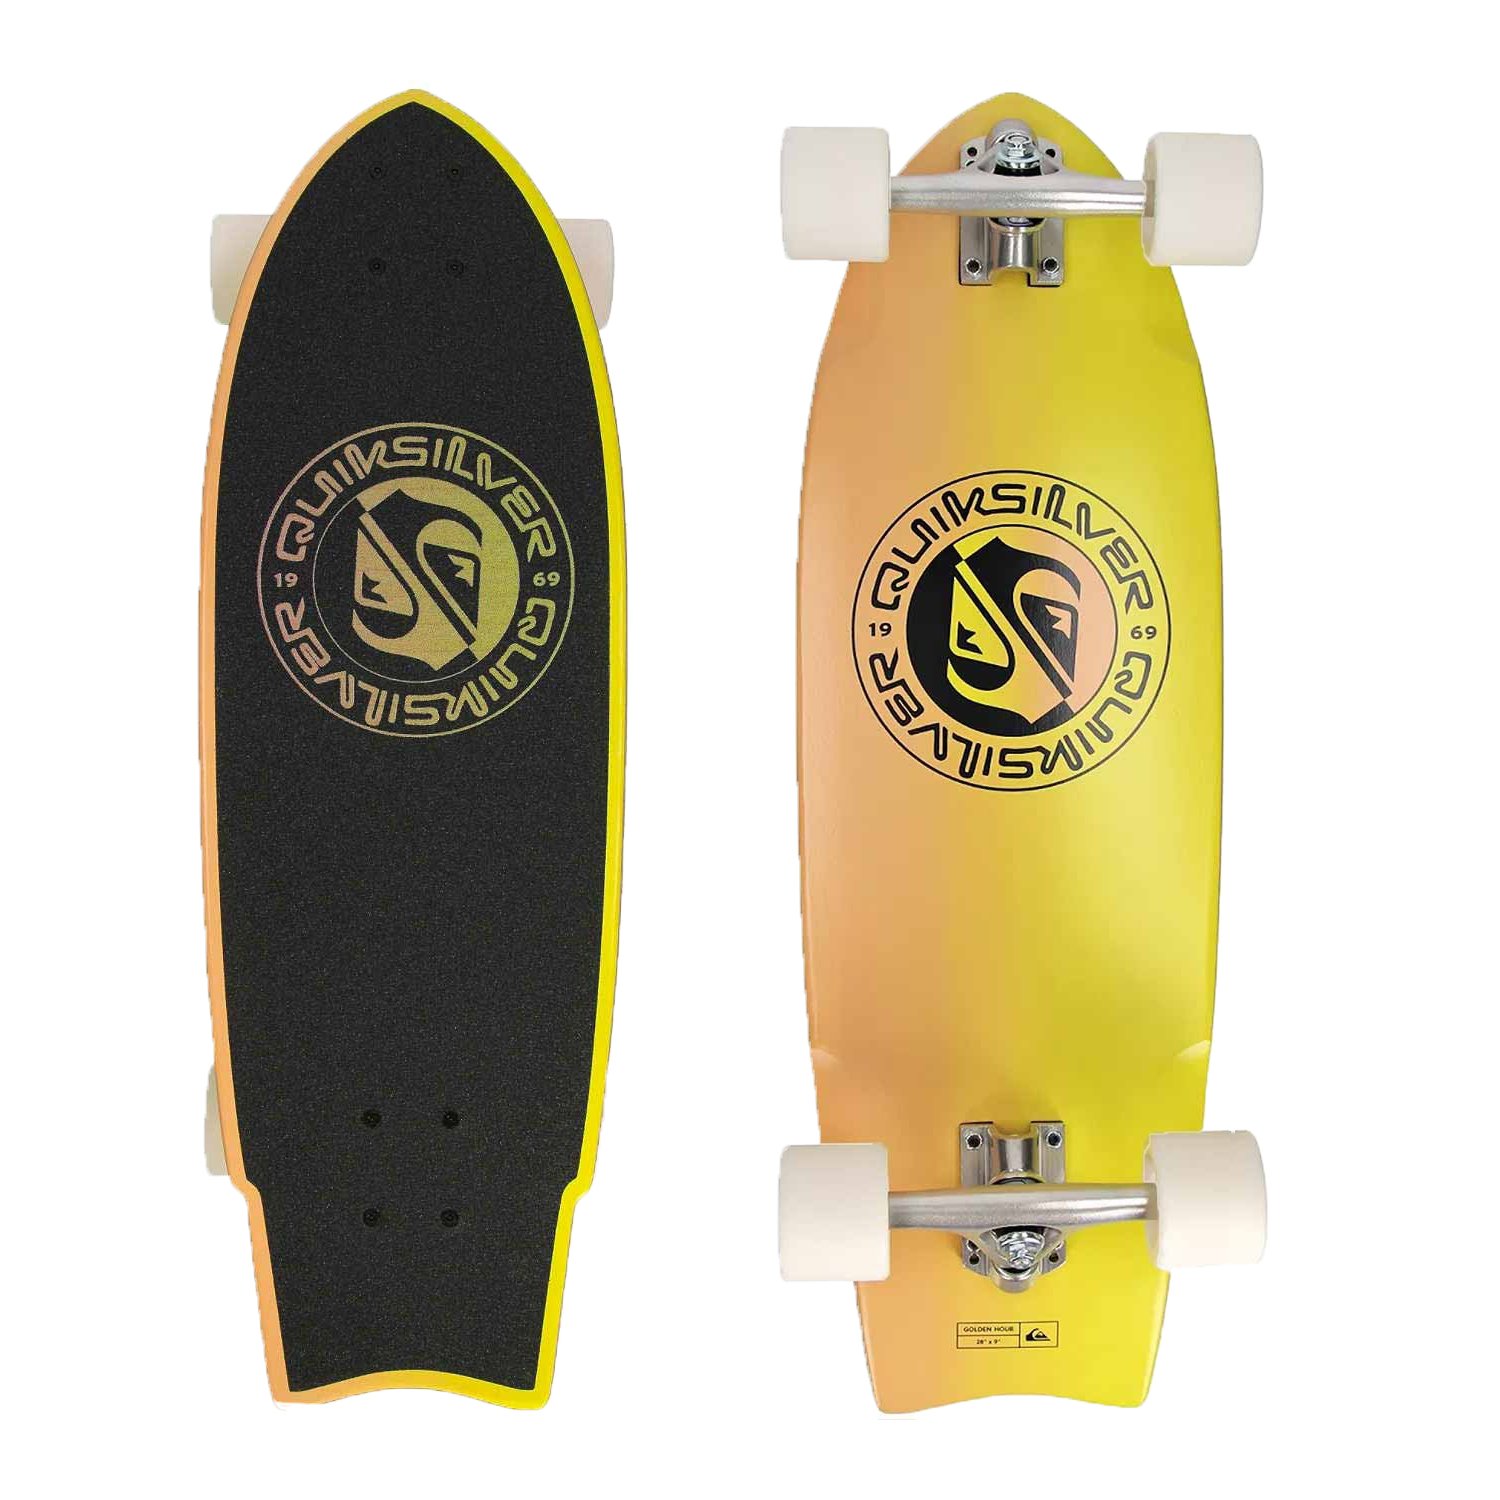 Quiksilver Golden Hour Erkek Skateboard Complete Set - Renkli - 1